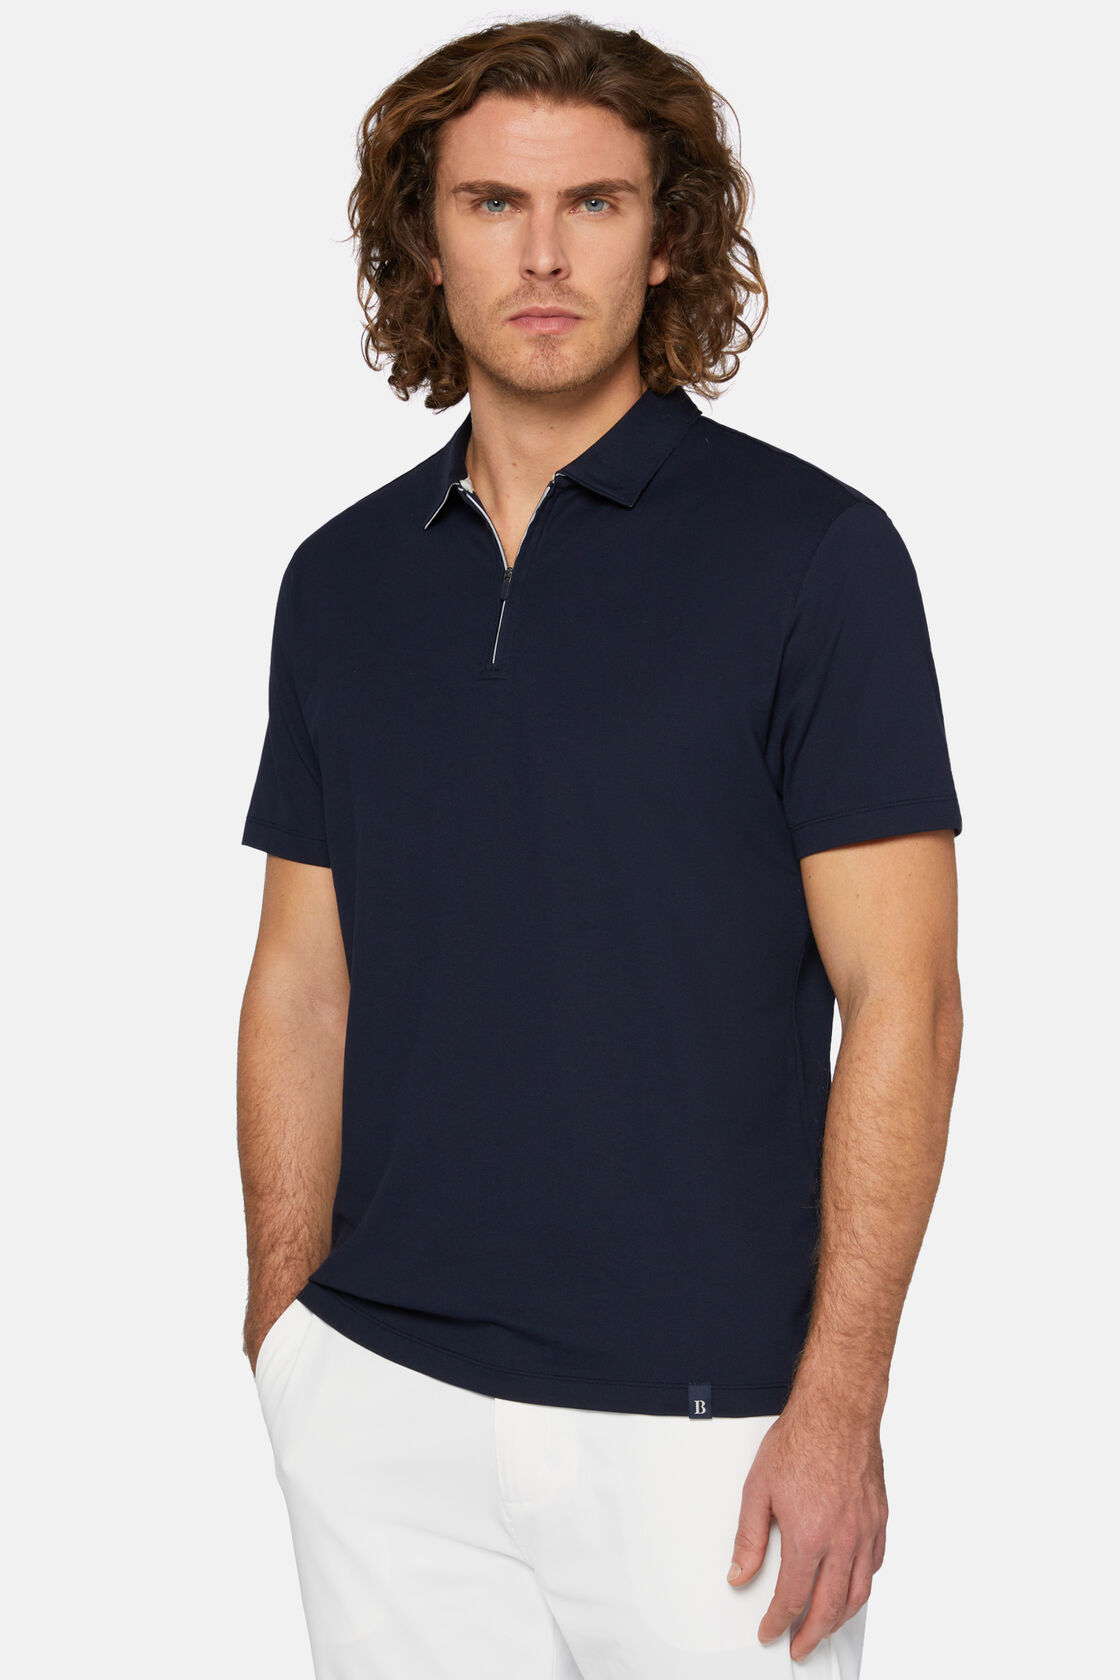 Hochwertiges Piqué-Poloshirt, Navy blau, hi-res